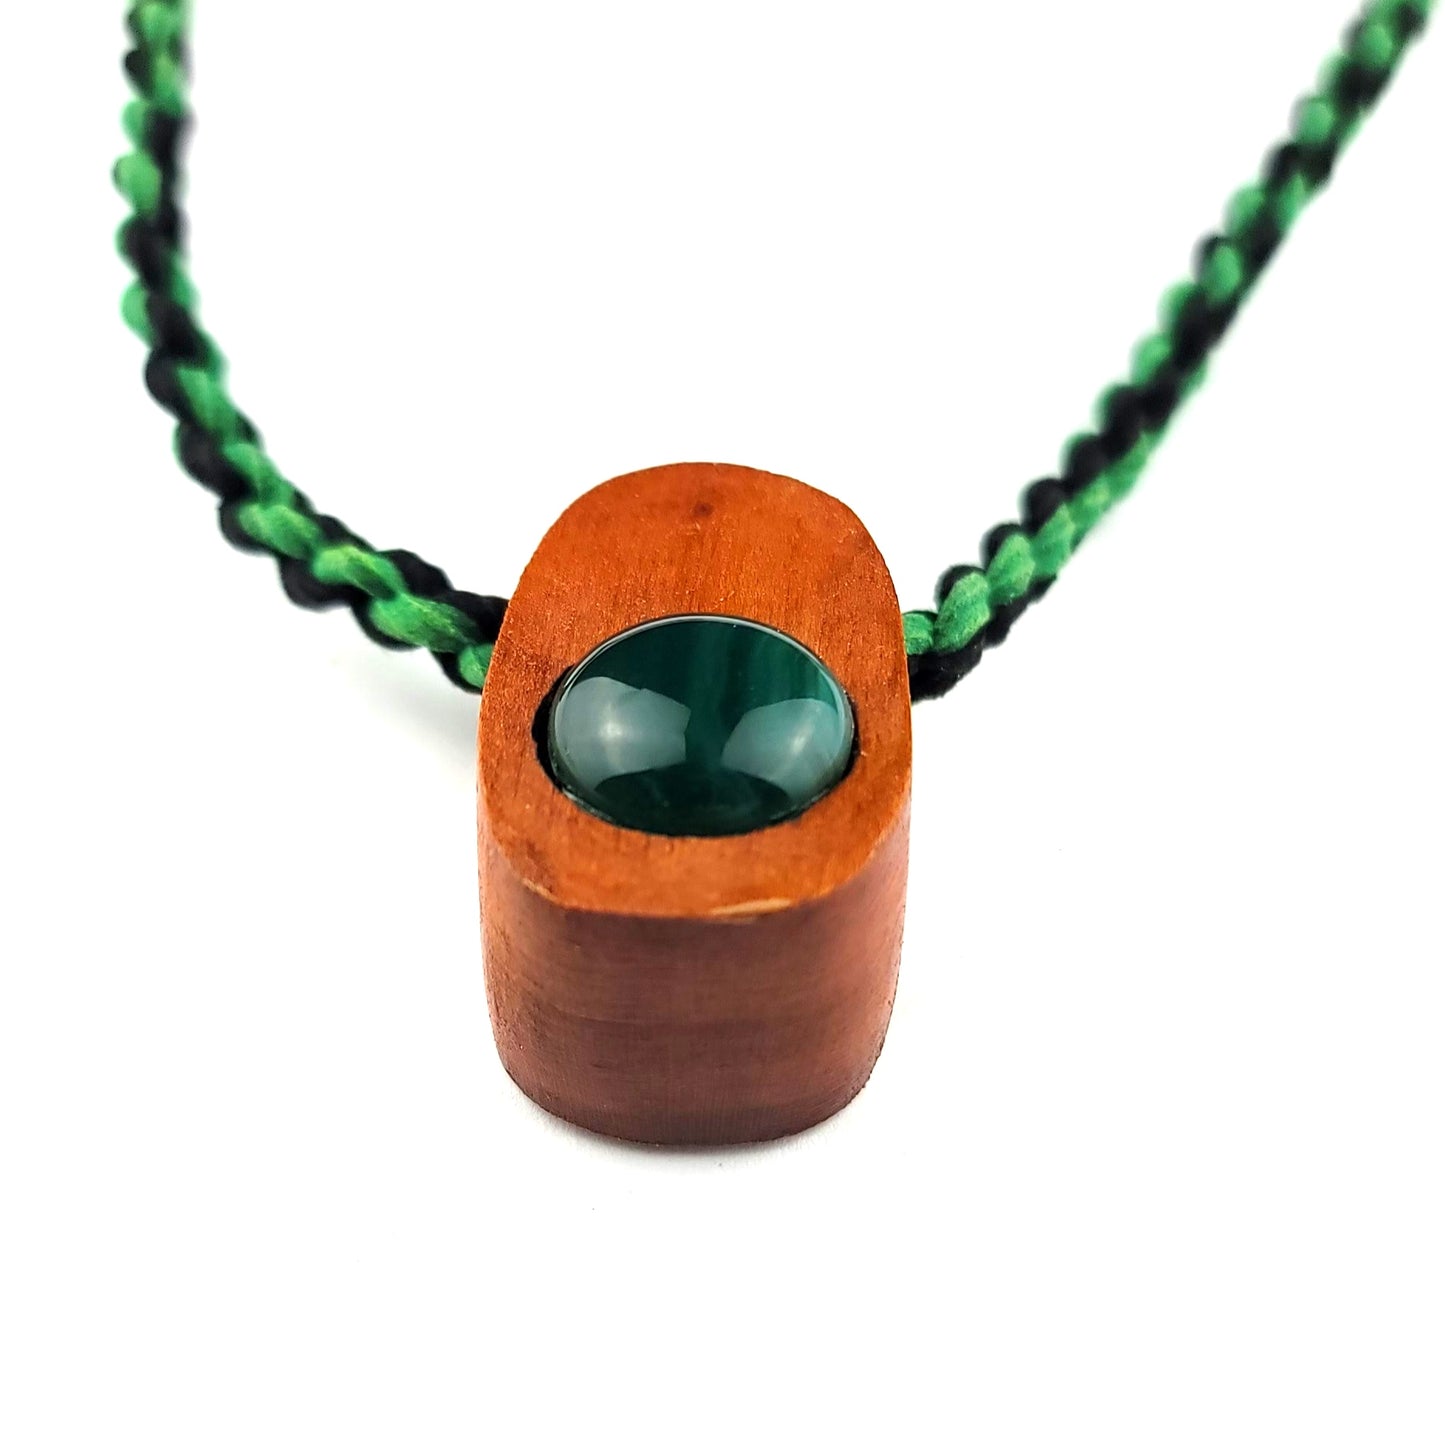 Green Onyx, Cherry Wood, Pendant, Necklace by J.J. Dean